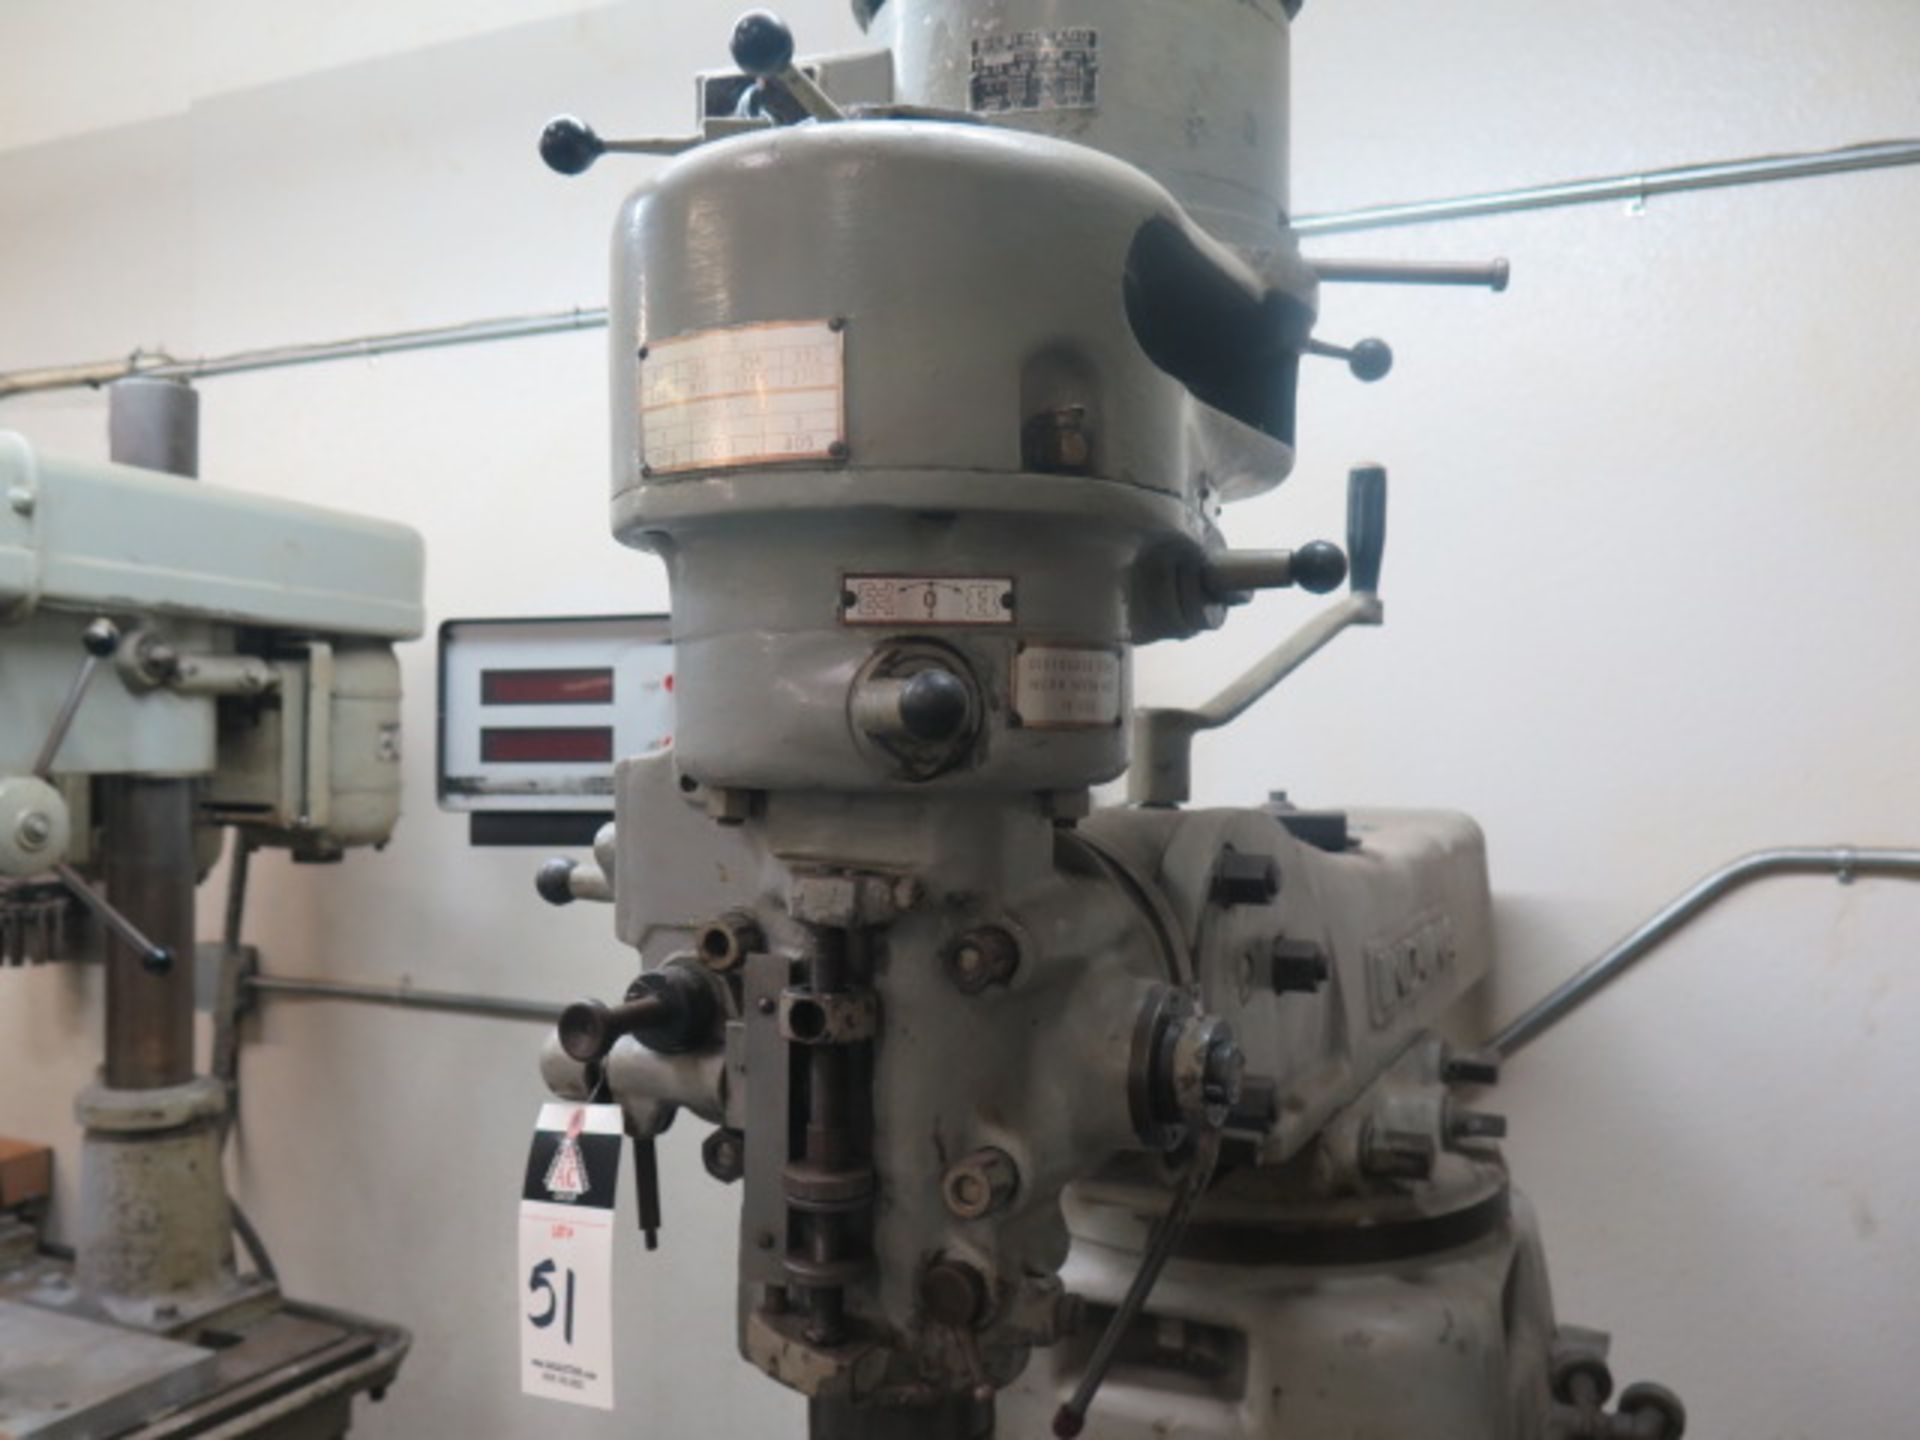 Induma Vertical Mill w/ Rutland DRO, 1.5Hp Motor, 80-2713 RPM, 8-Speeds, 9” x 42” Table, Coolant - Image 3 of 5